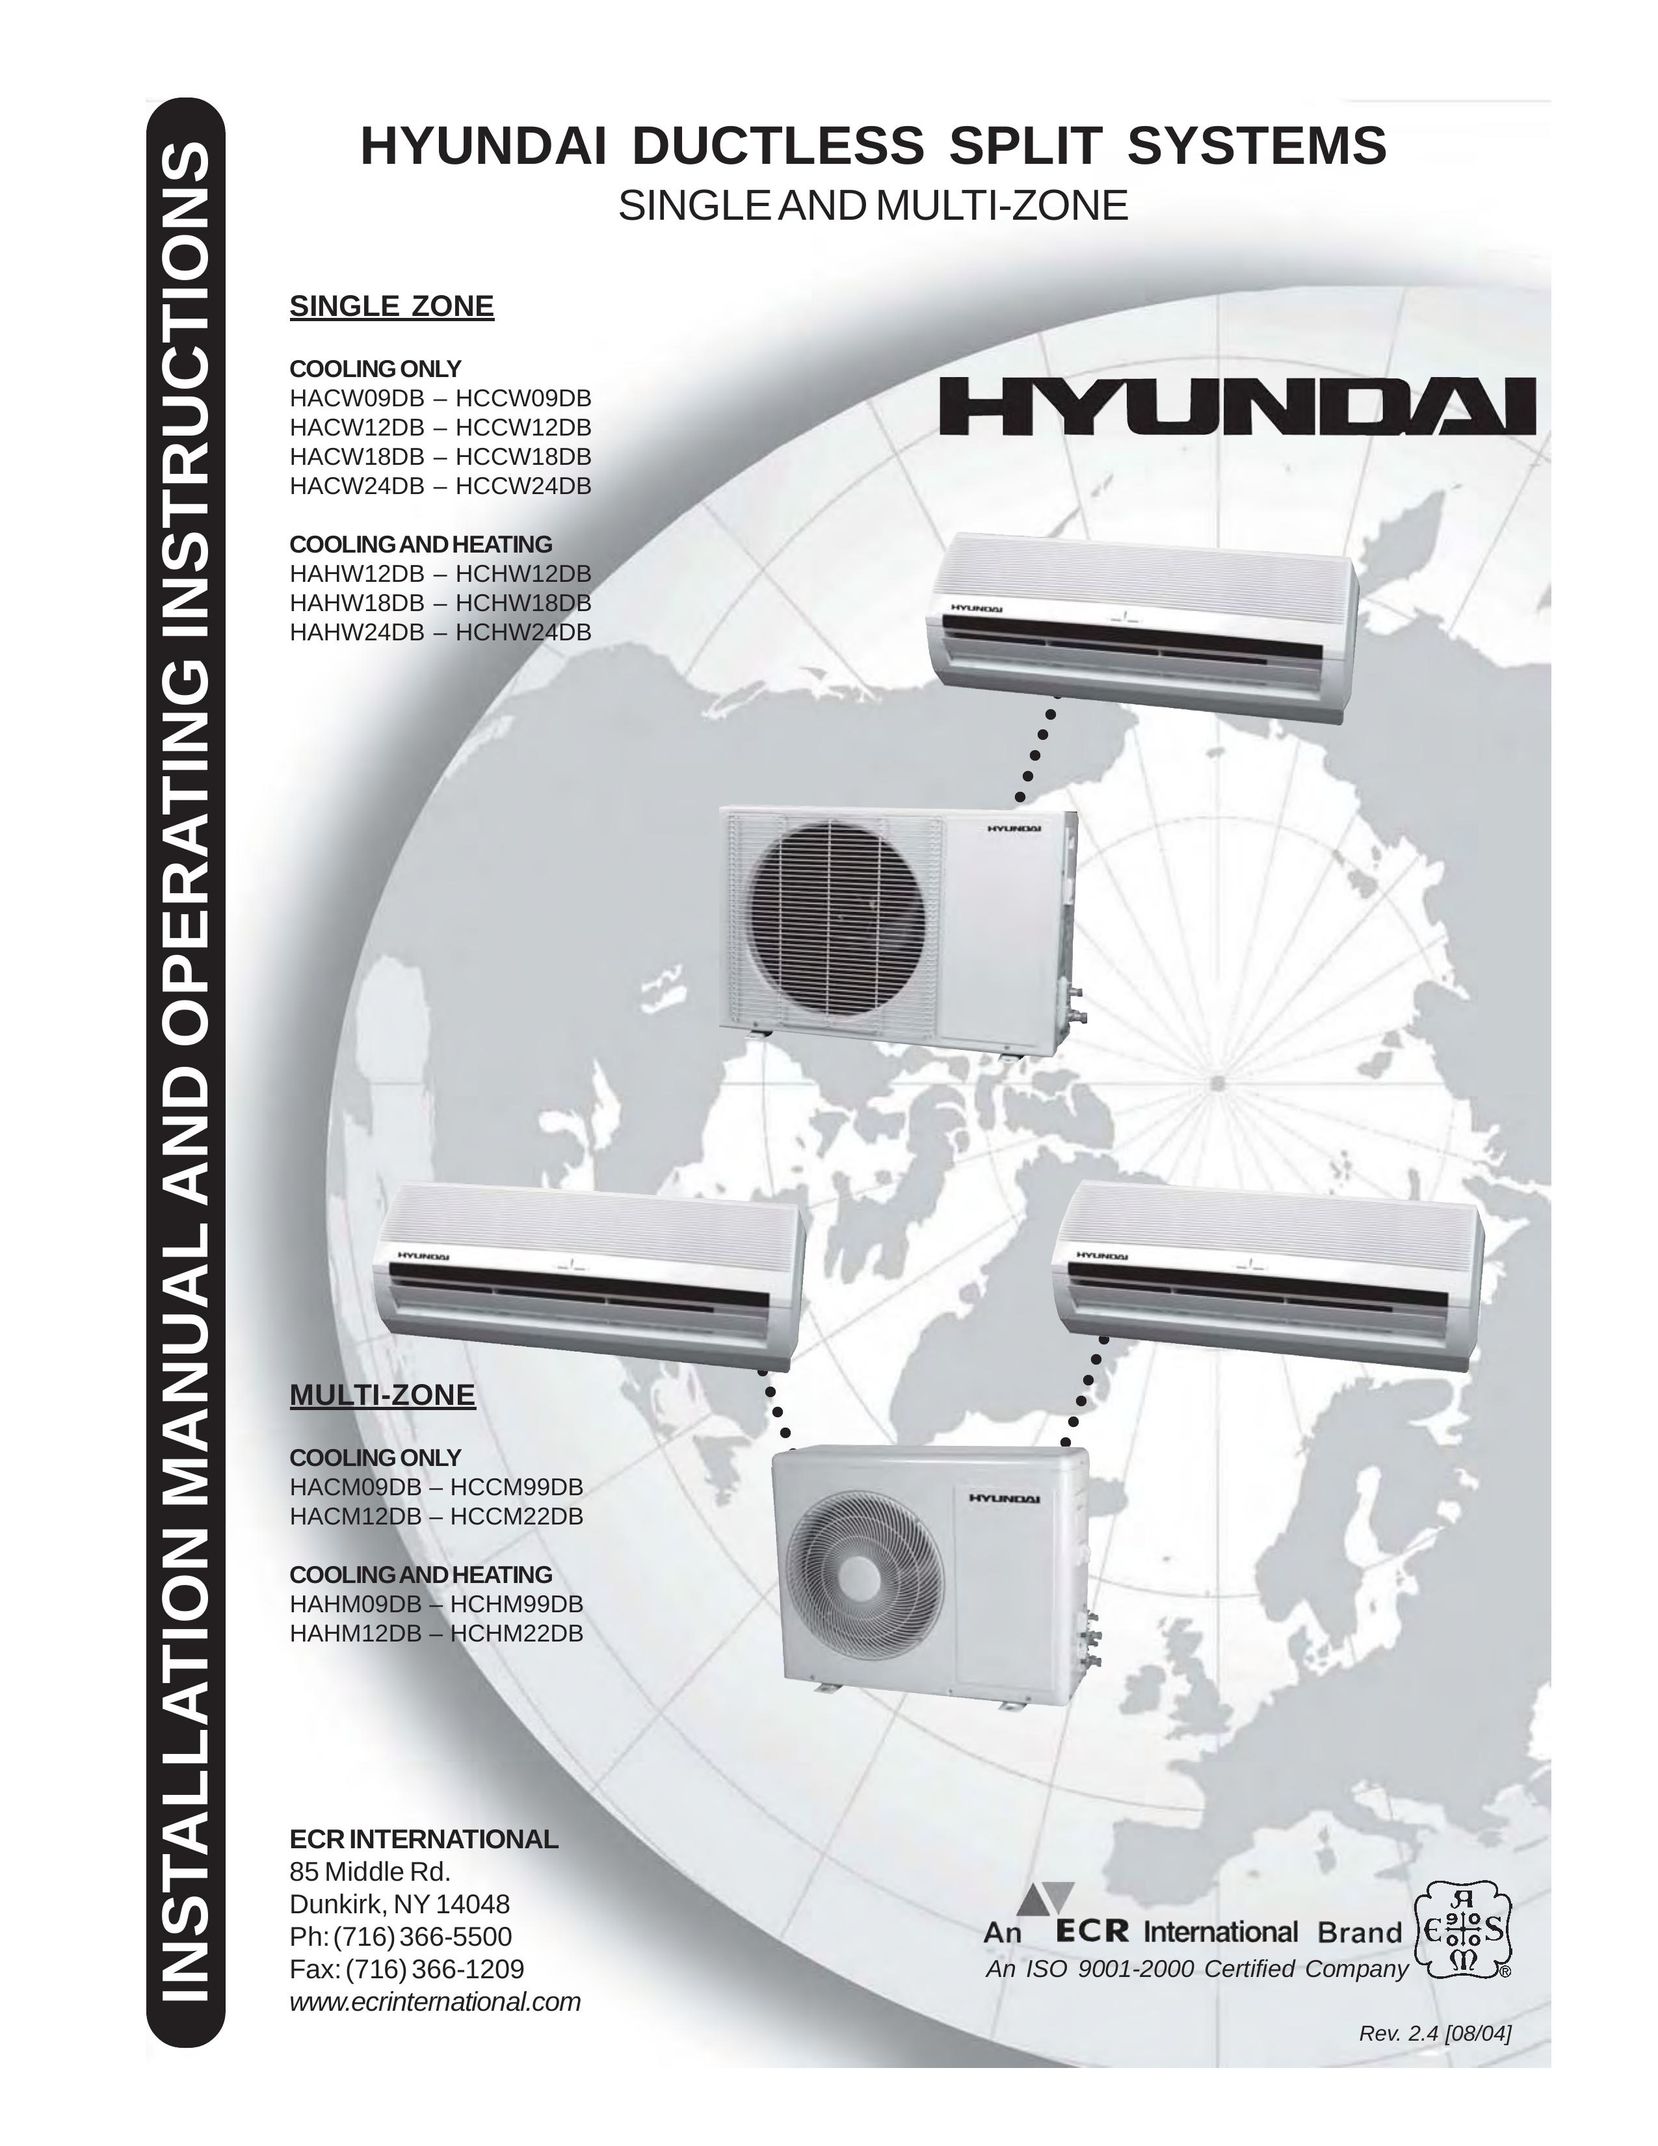 Hyundai HACW09DB - HCCW09DB Air Conditioner User Manual